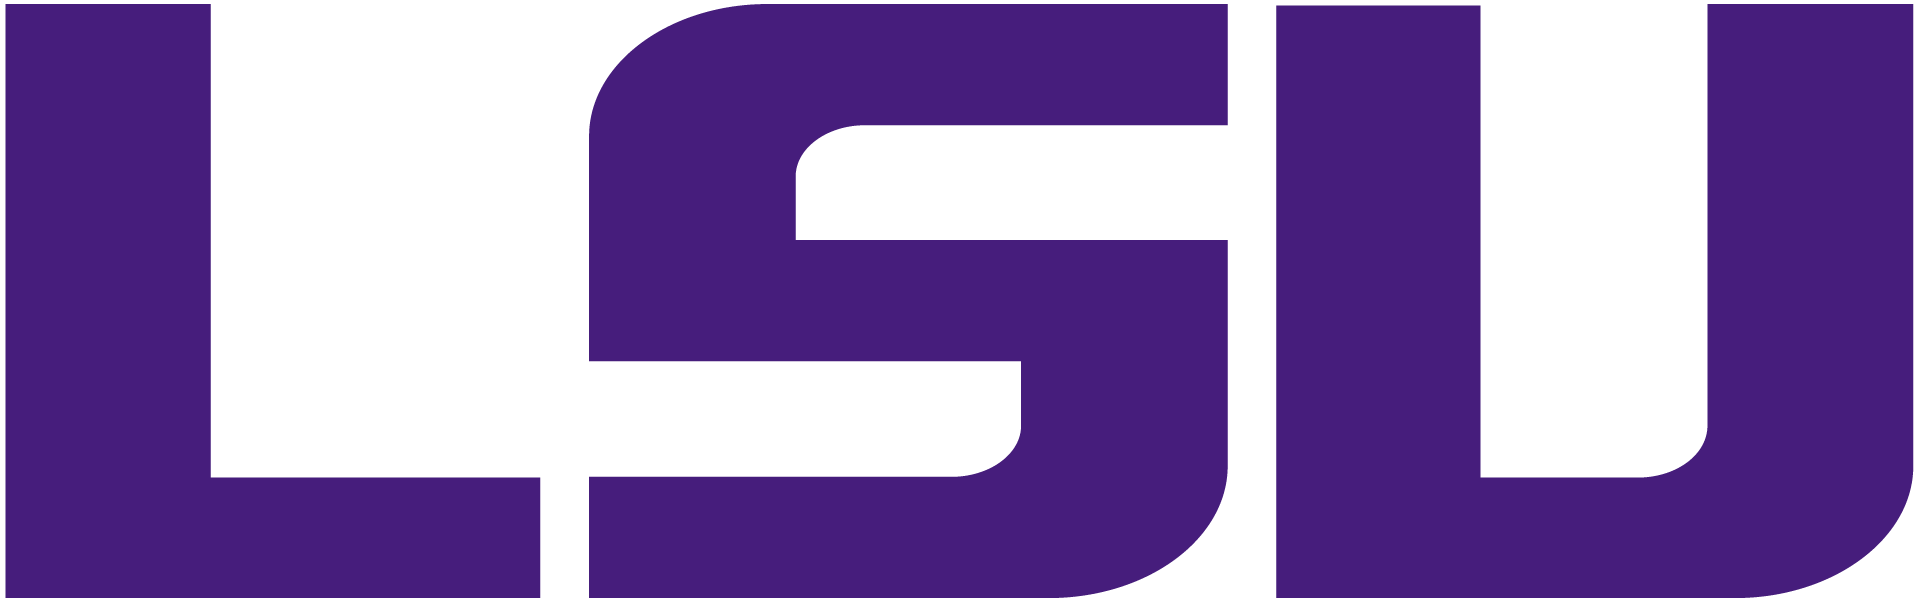 orter_logos/lsu company logo